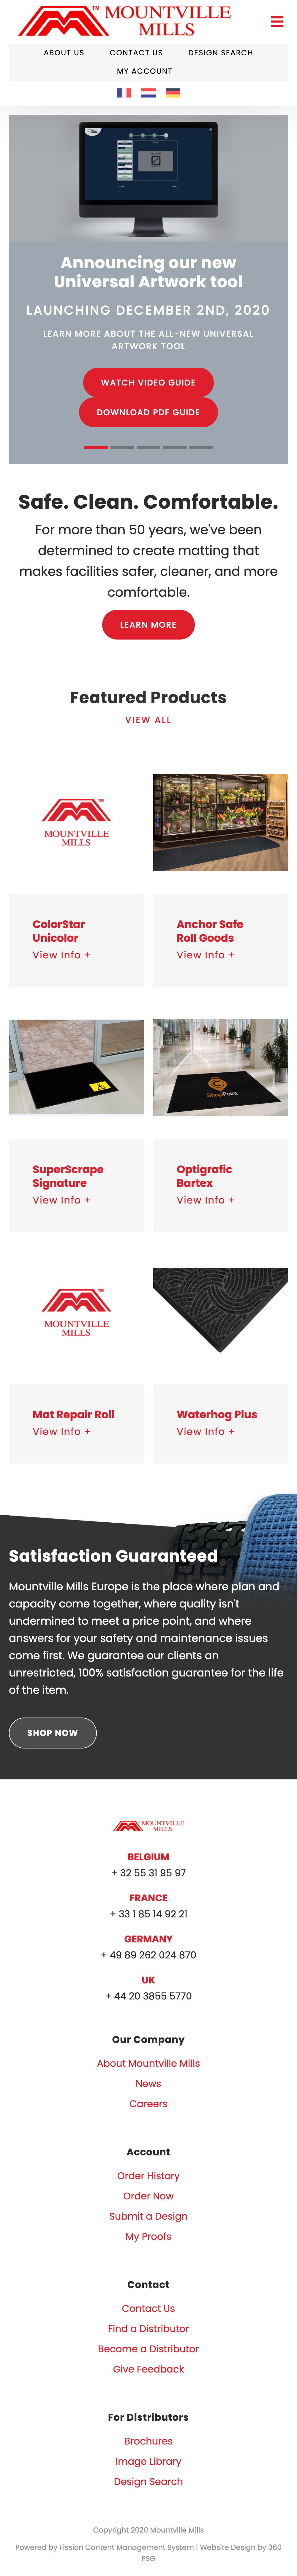 Mountville Mills Website - Mobile